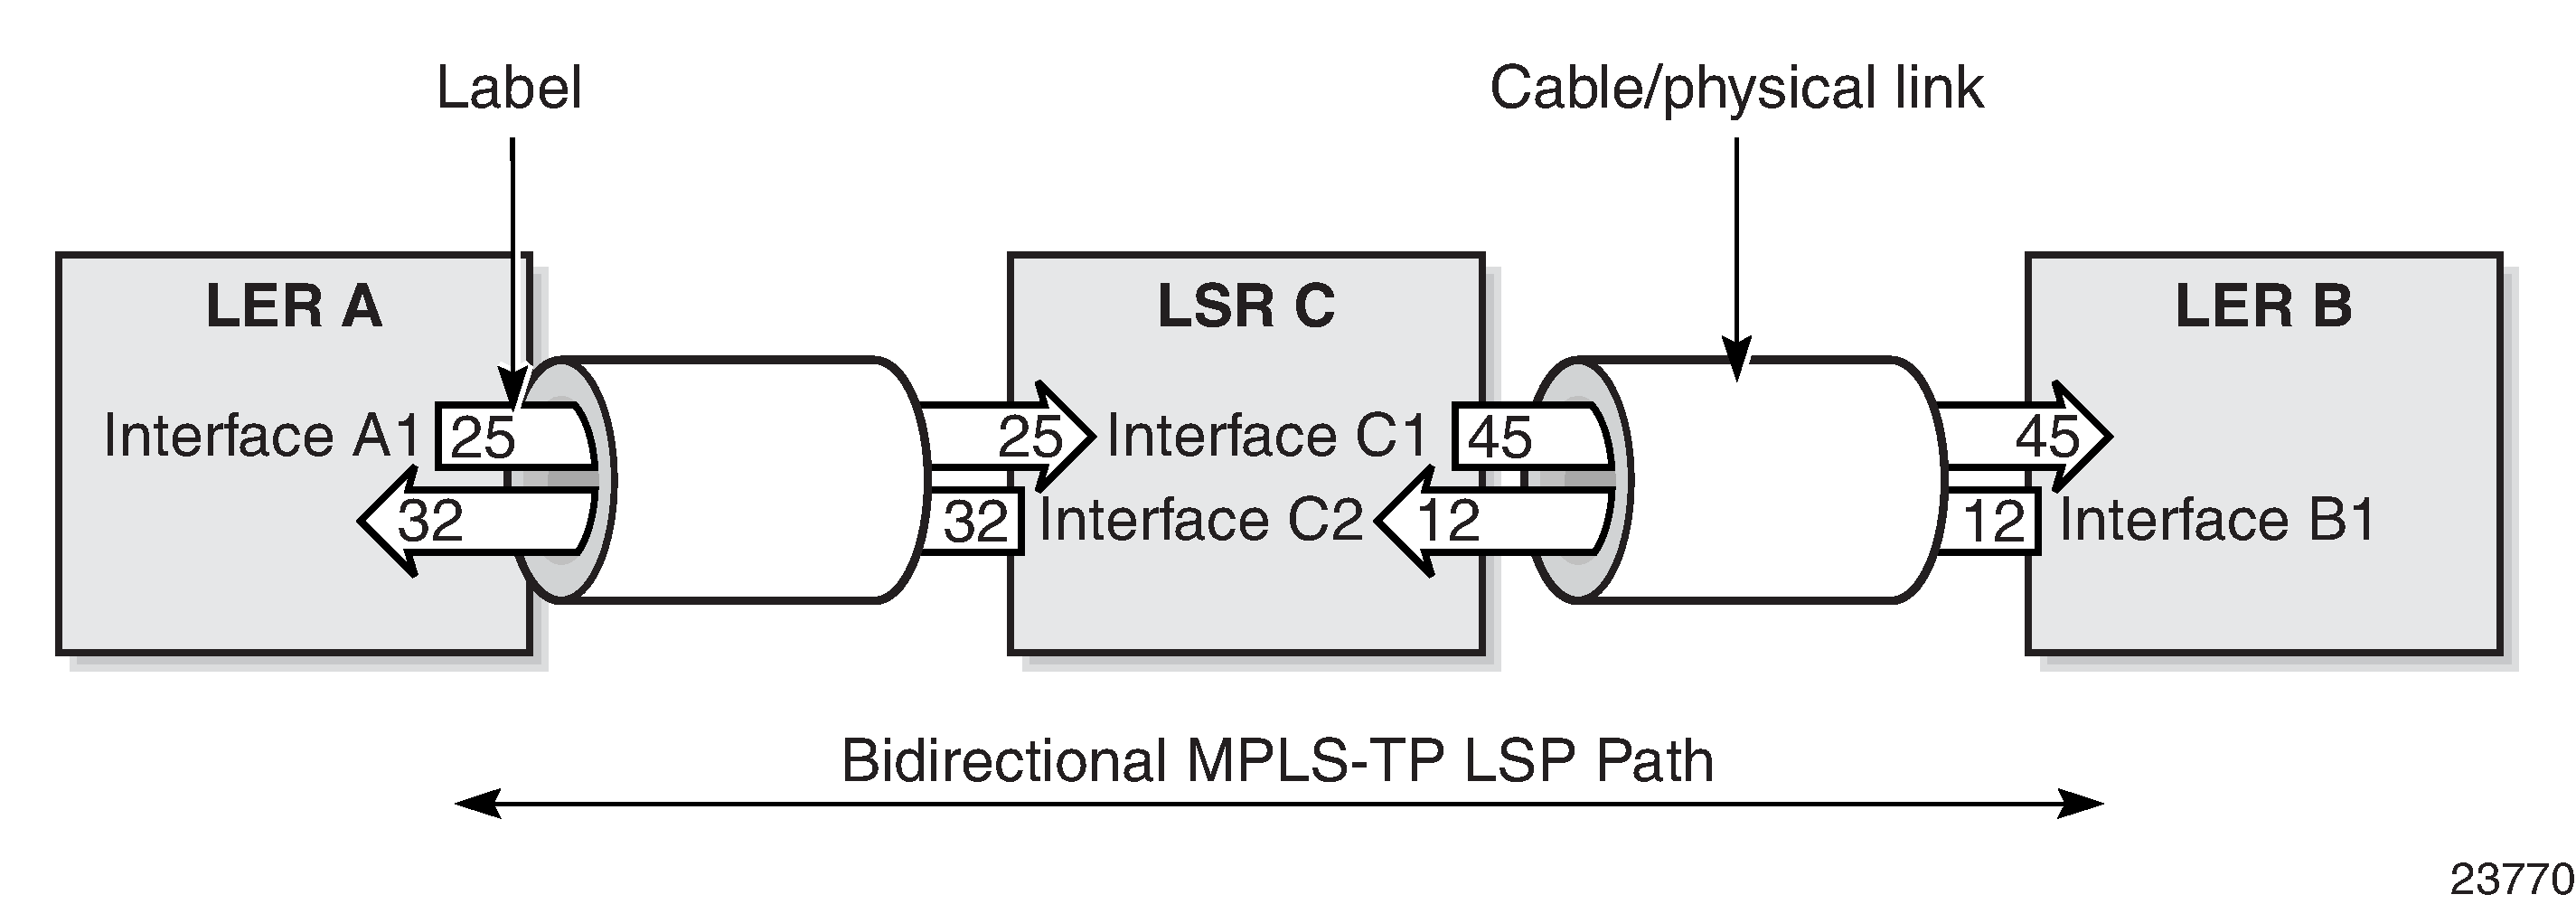 Sample bidirectional MPLS-TP LSP